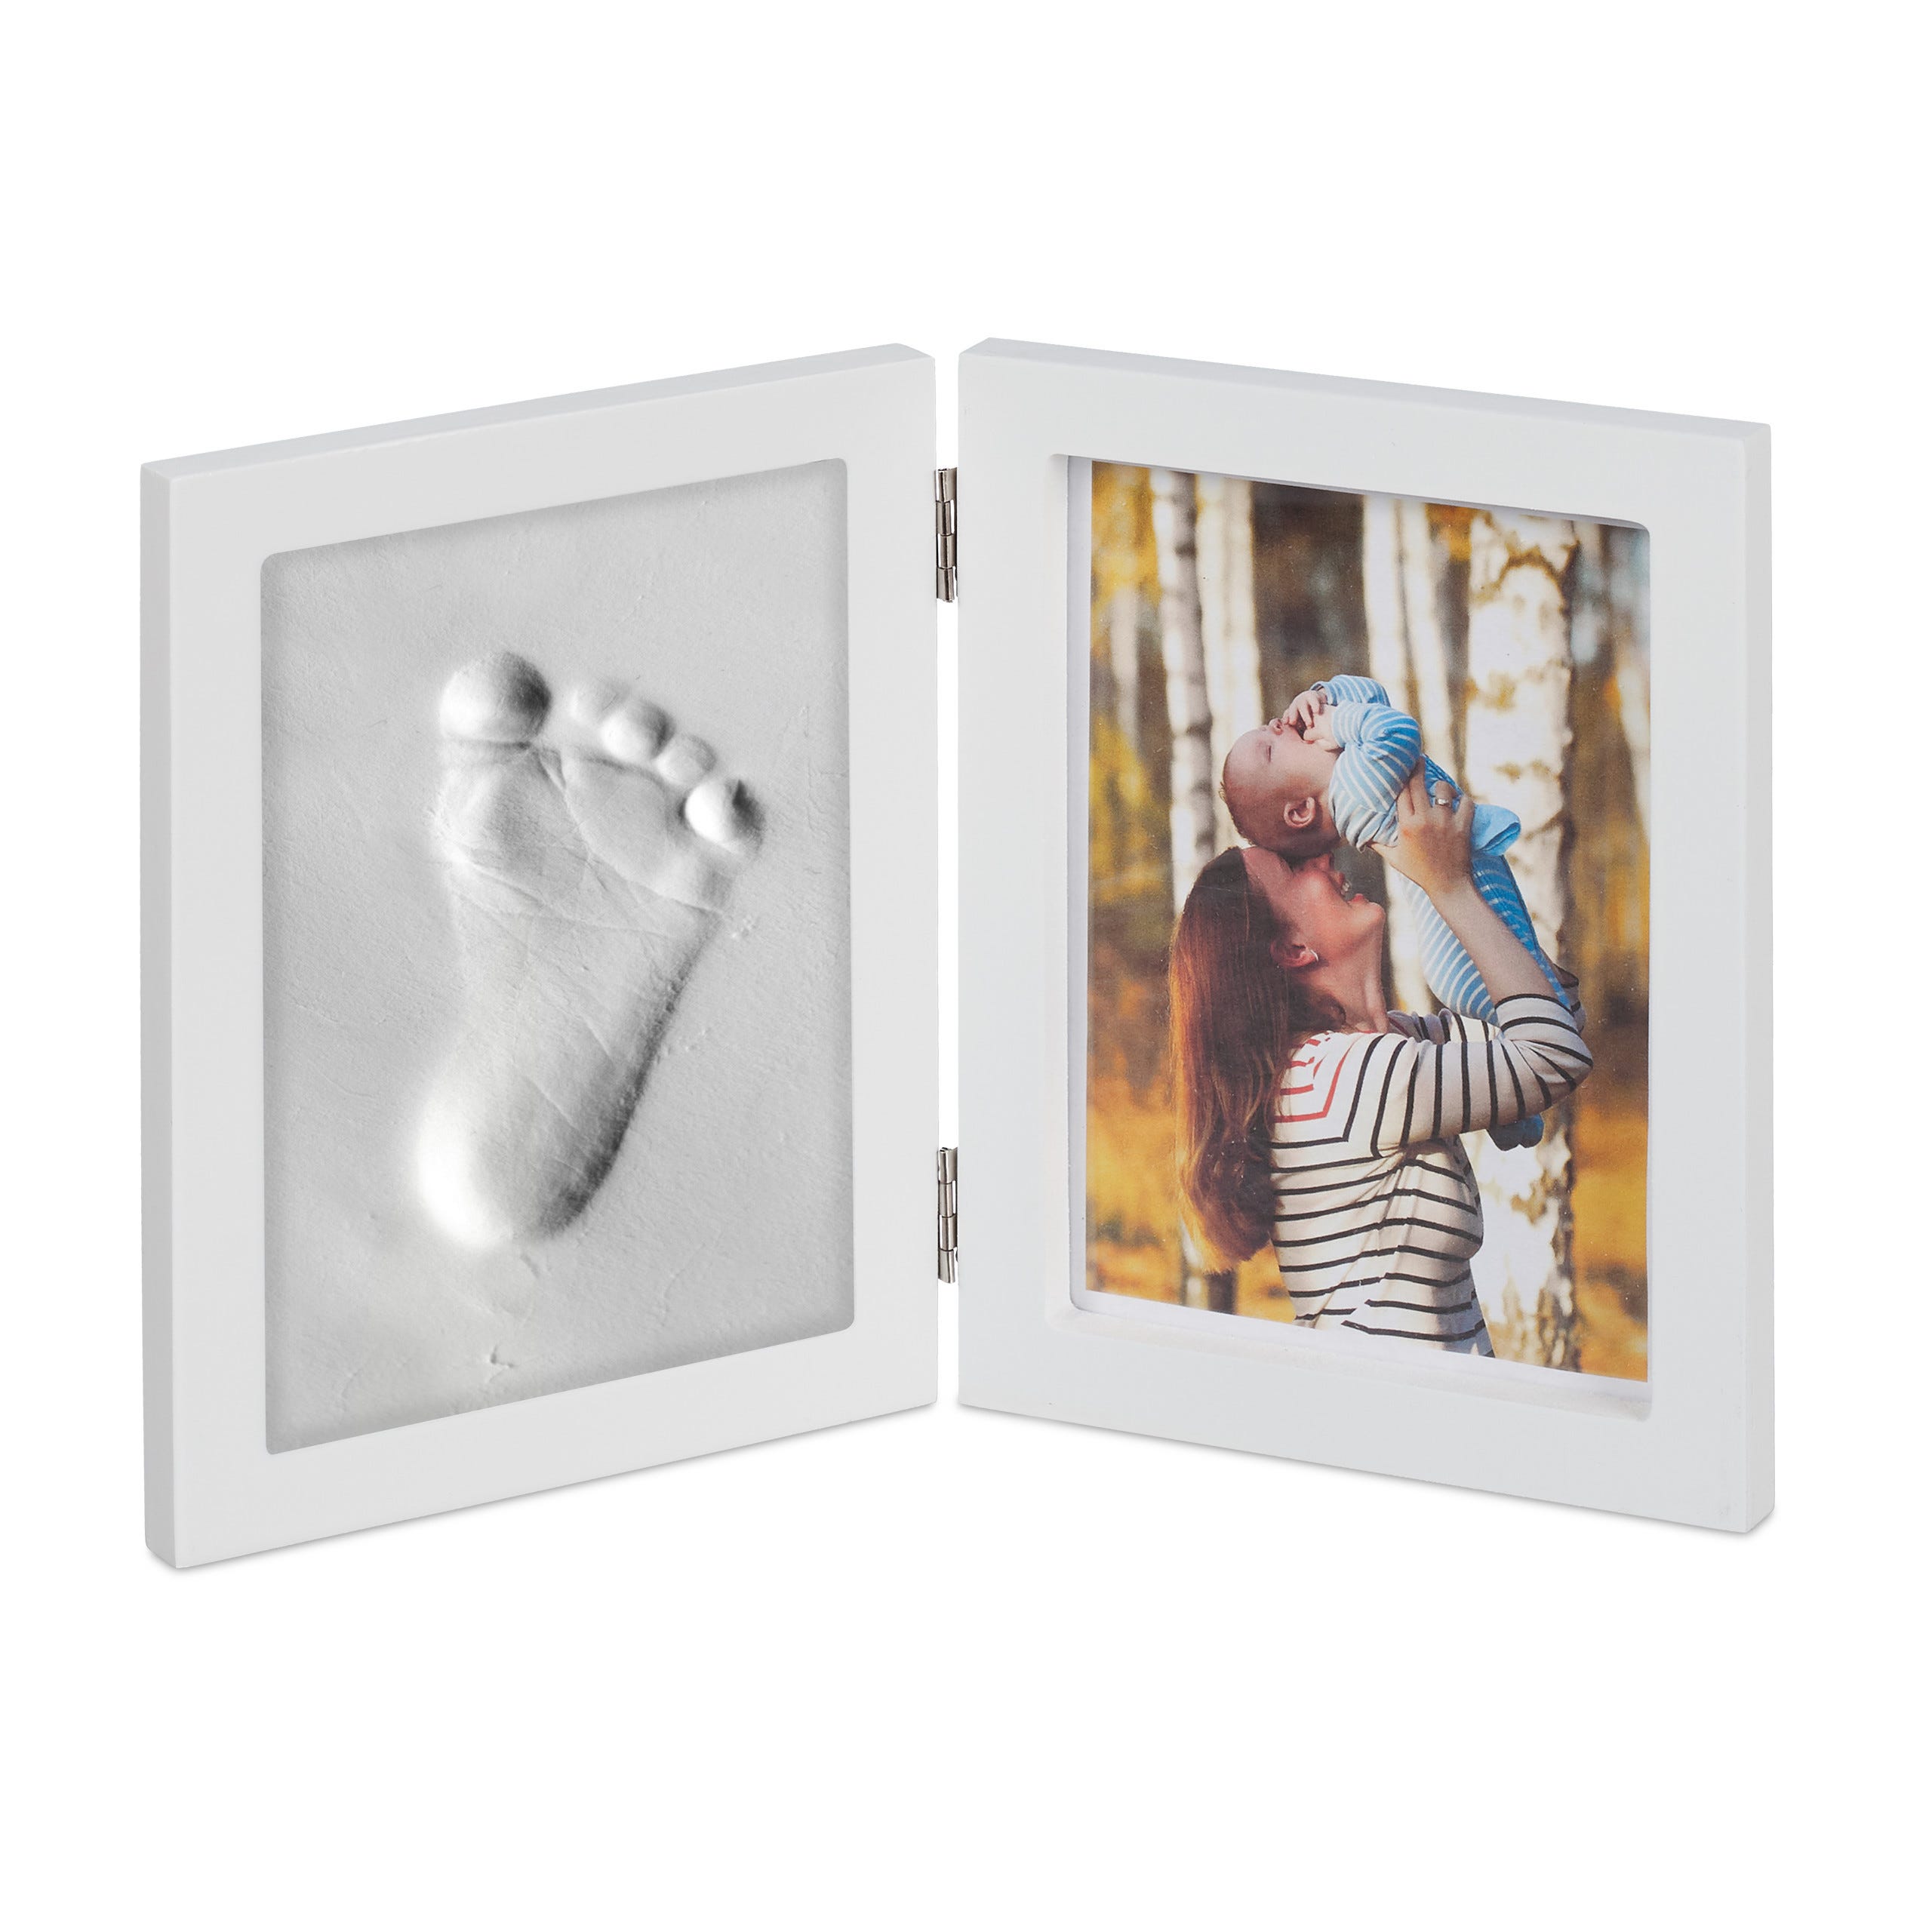 1x Cadre photos bébé avec empreintes plâtre, jeu pour main ou pied; DIY empreinte  bébé avec cadre, blanc